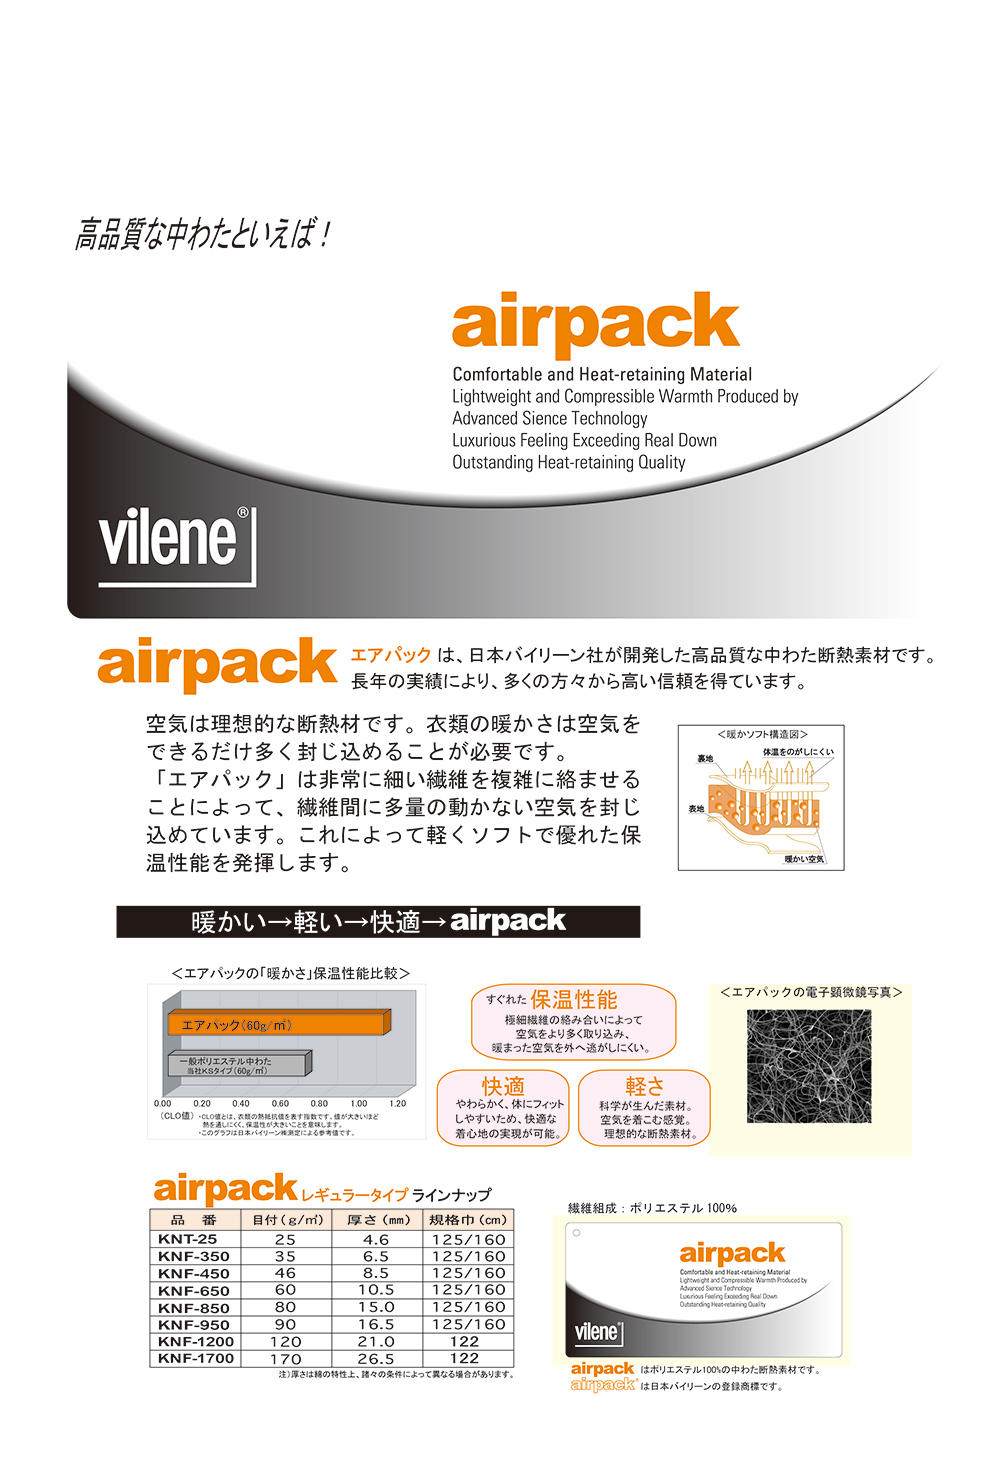 KNF1700 Quilt Batting Air Pack 170g[Interlining] Vilene (JAPAN Vilene)